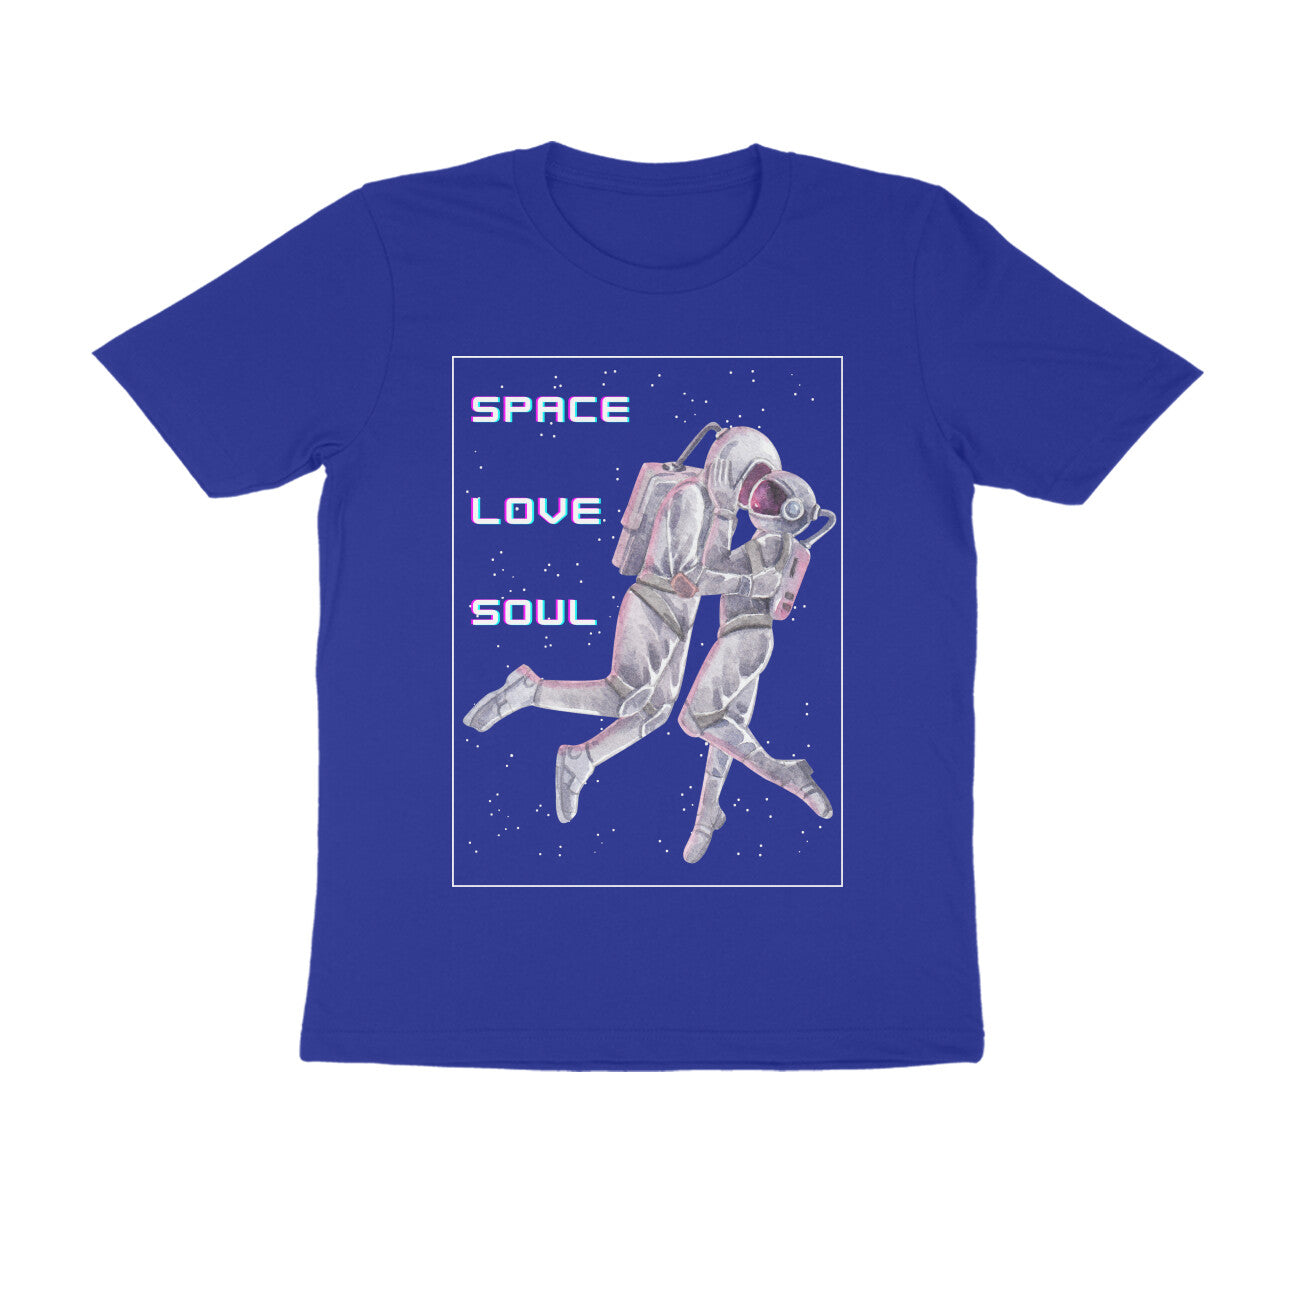 Black White Gray Watercolor Illustration Astronaut in Love T-Shirt - Men's Half Sleeve Round Neck T-Shirt